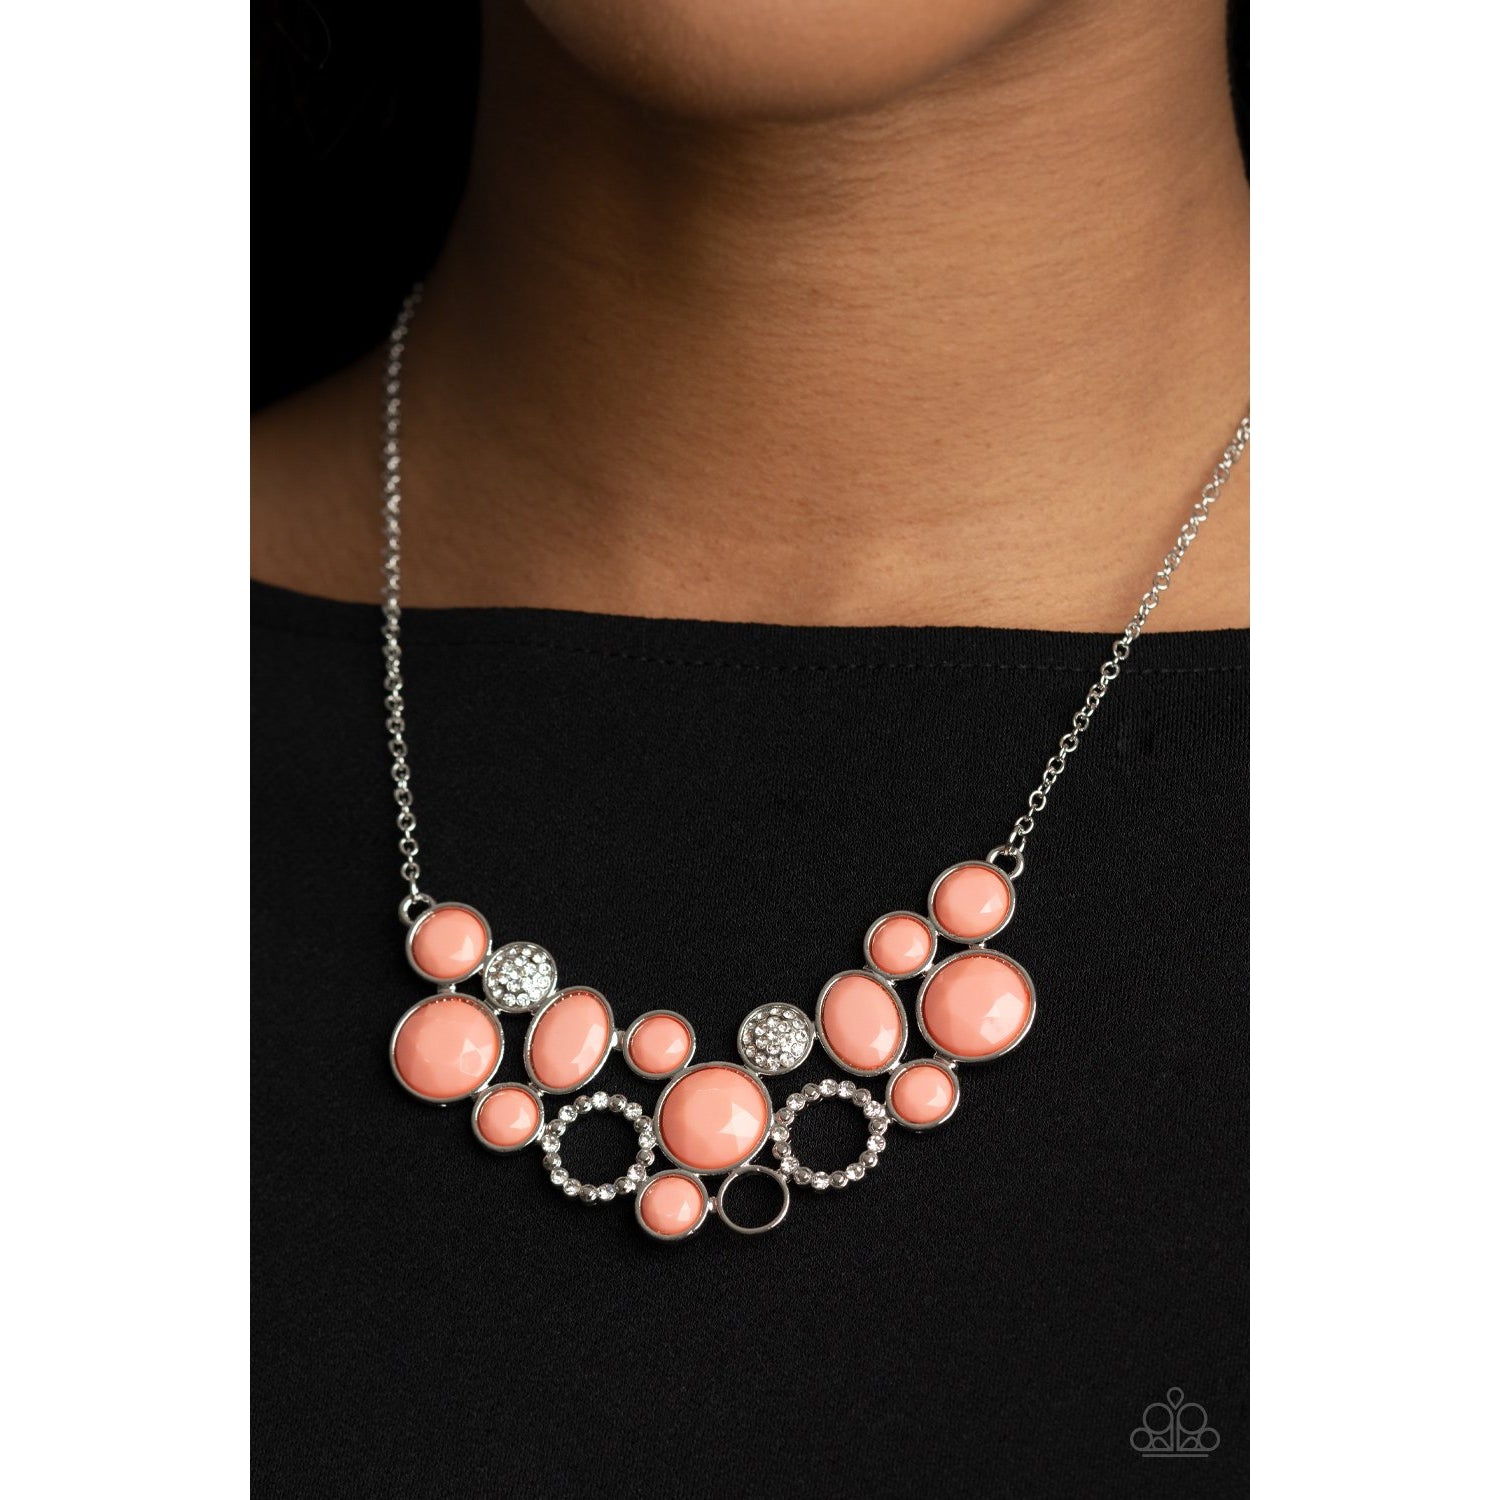 Extra Eloquent - Coral Orange Necklace - Paparazzi Accessories - GlaMarous Titi Jewels